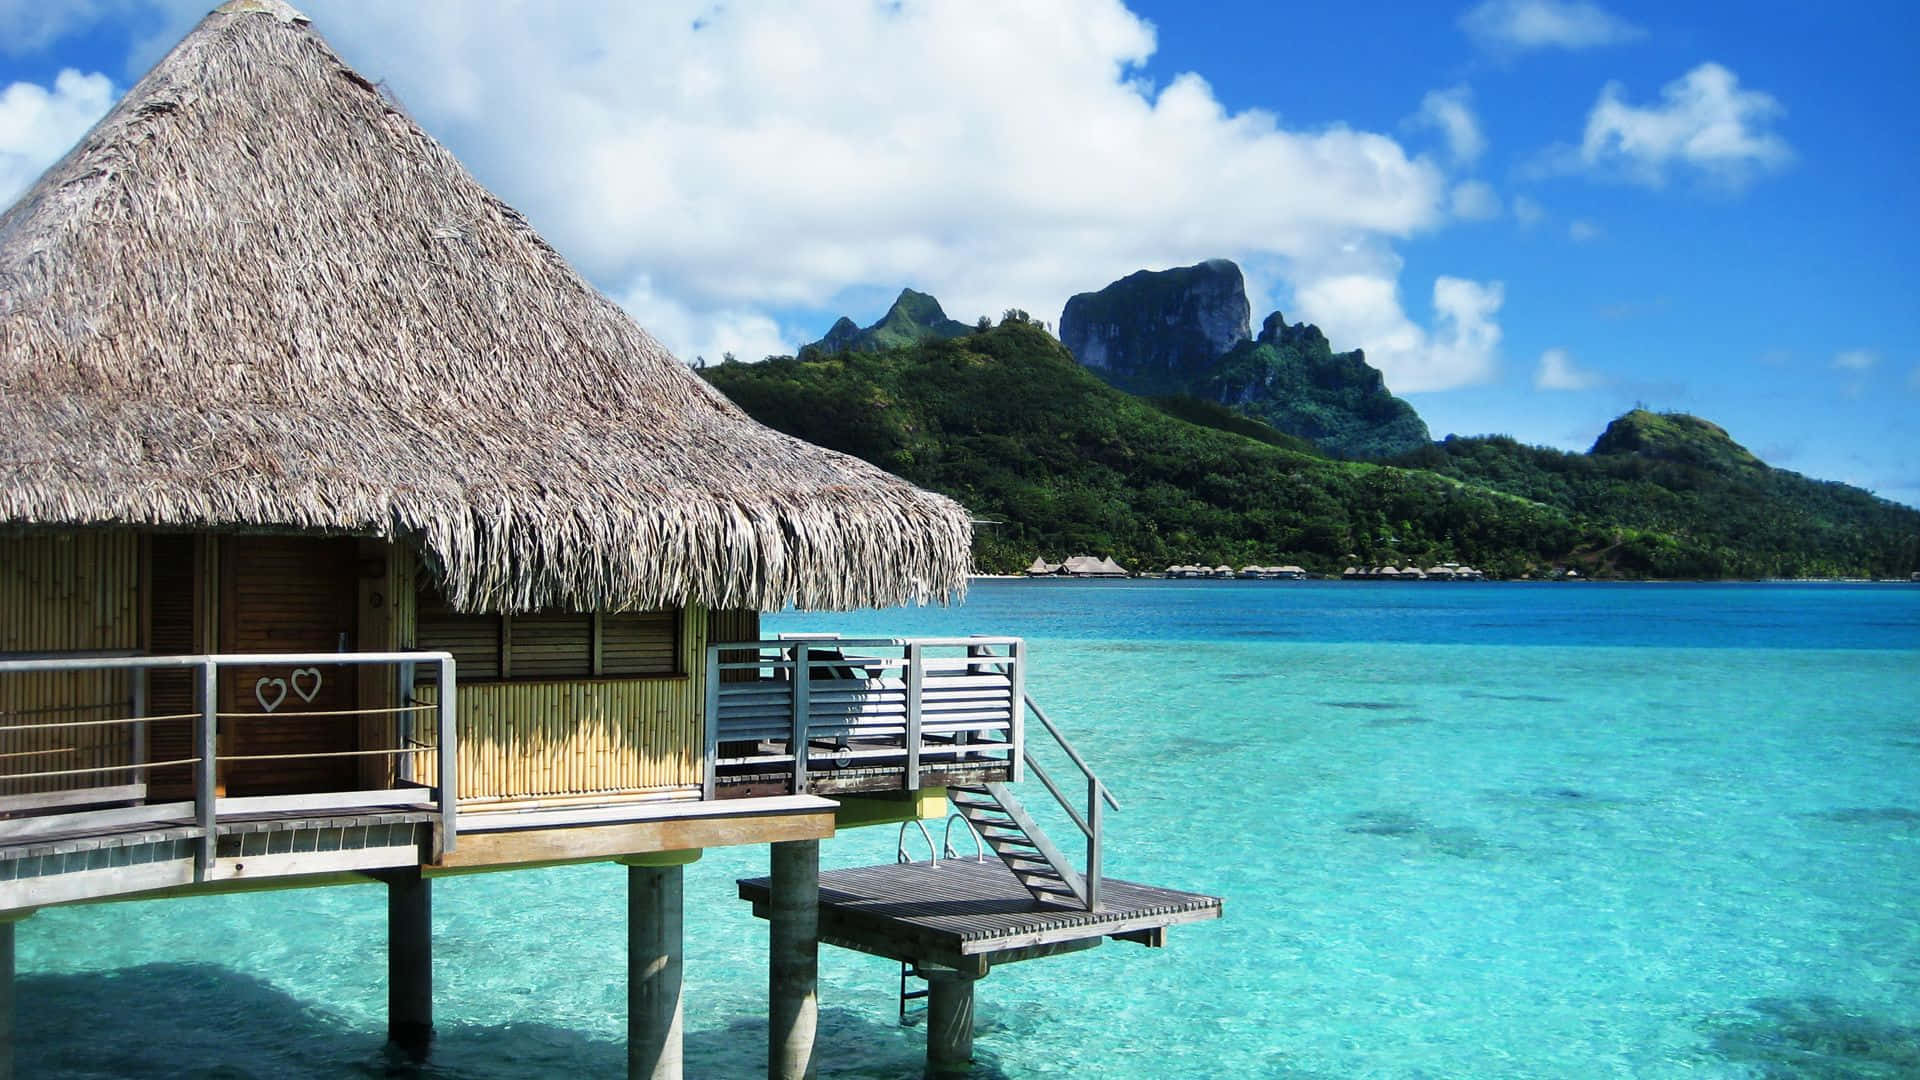 Experience the picturesque paradise of Bora Bora